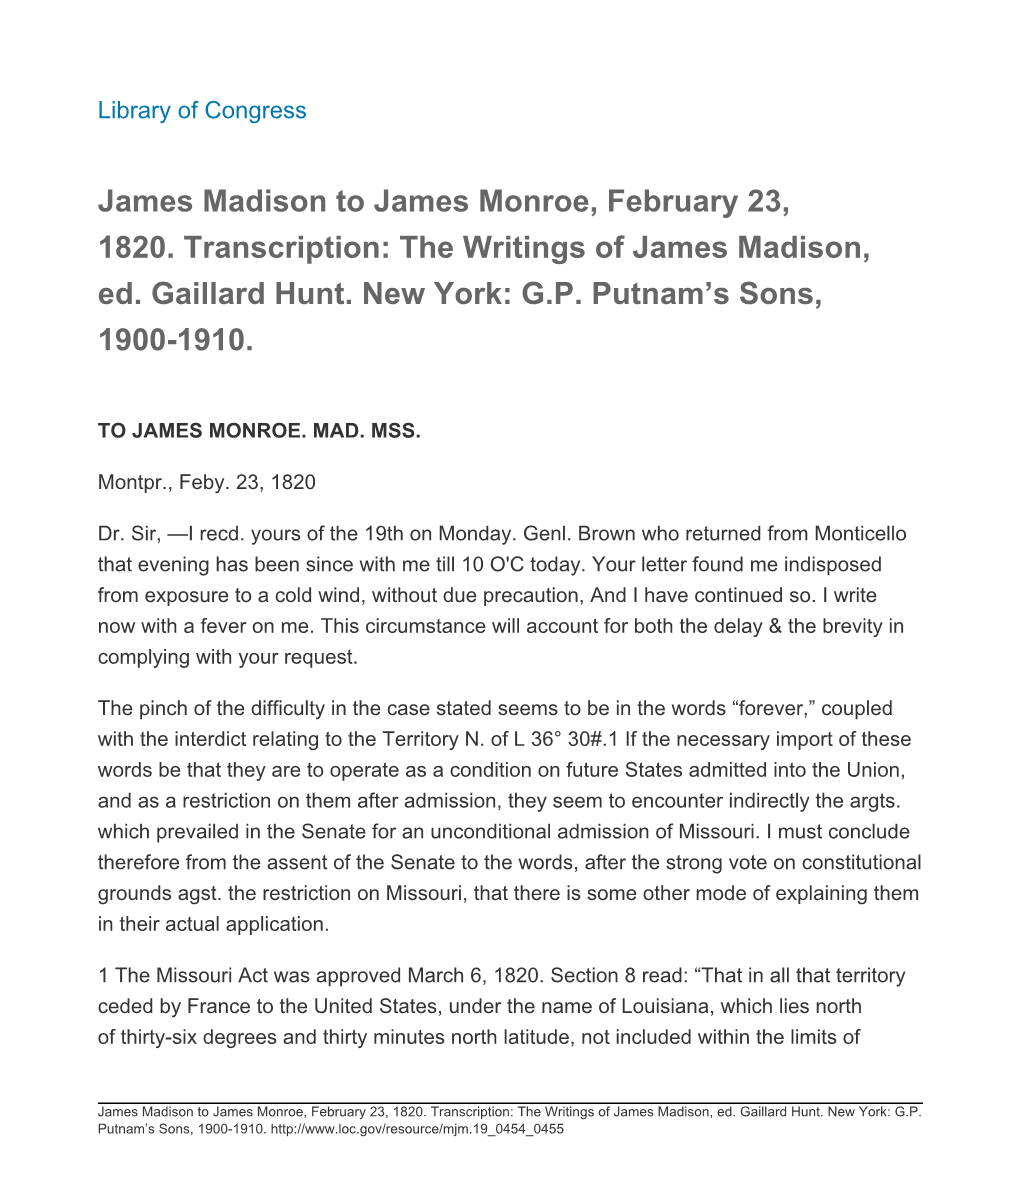 James Madison to James Monroe, February 23, 1820. Transcription: the Writings of James Madison, Ed